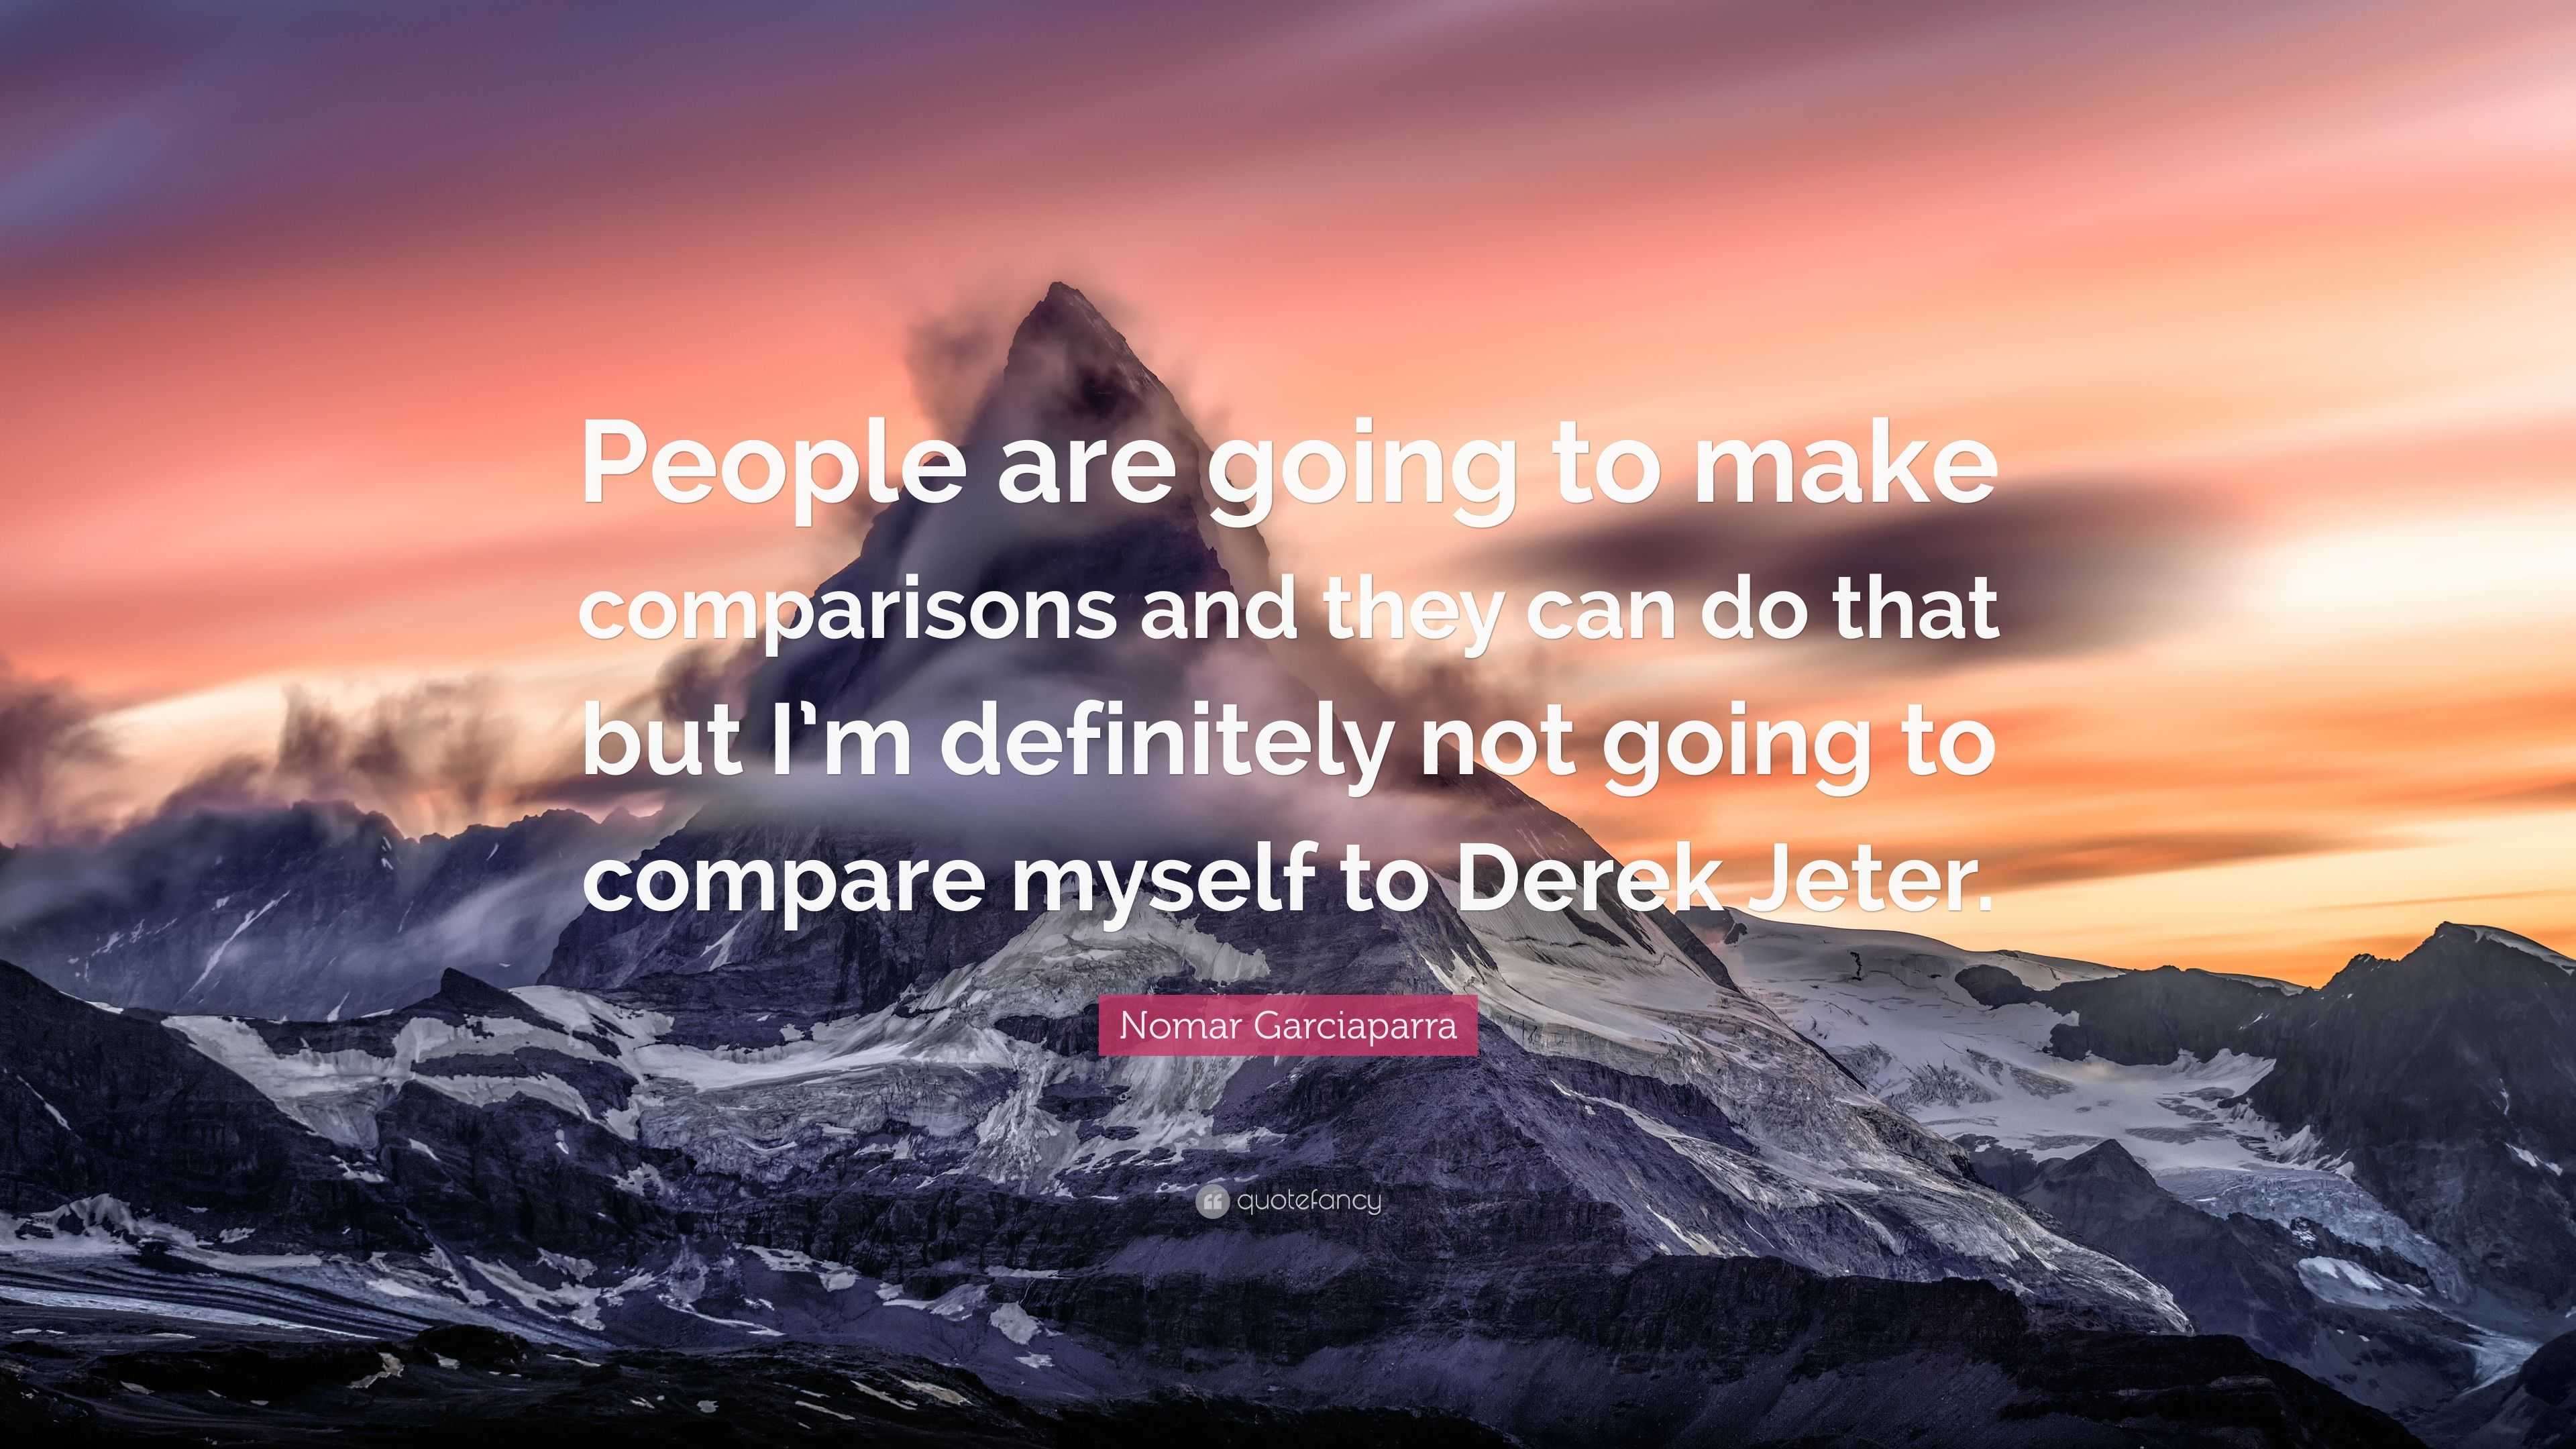 Who Had Better Peak – Nomar Garciaparra or Derek Jeter?